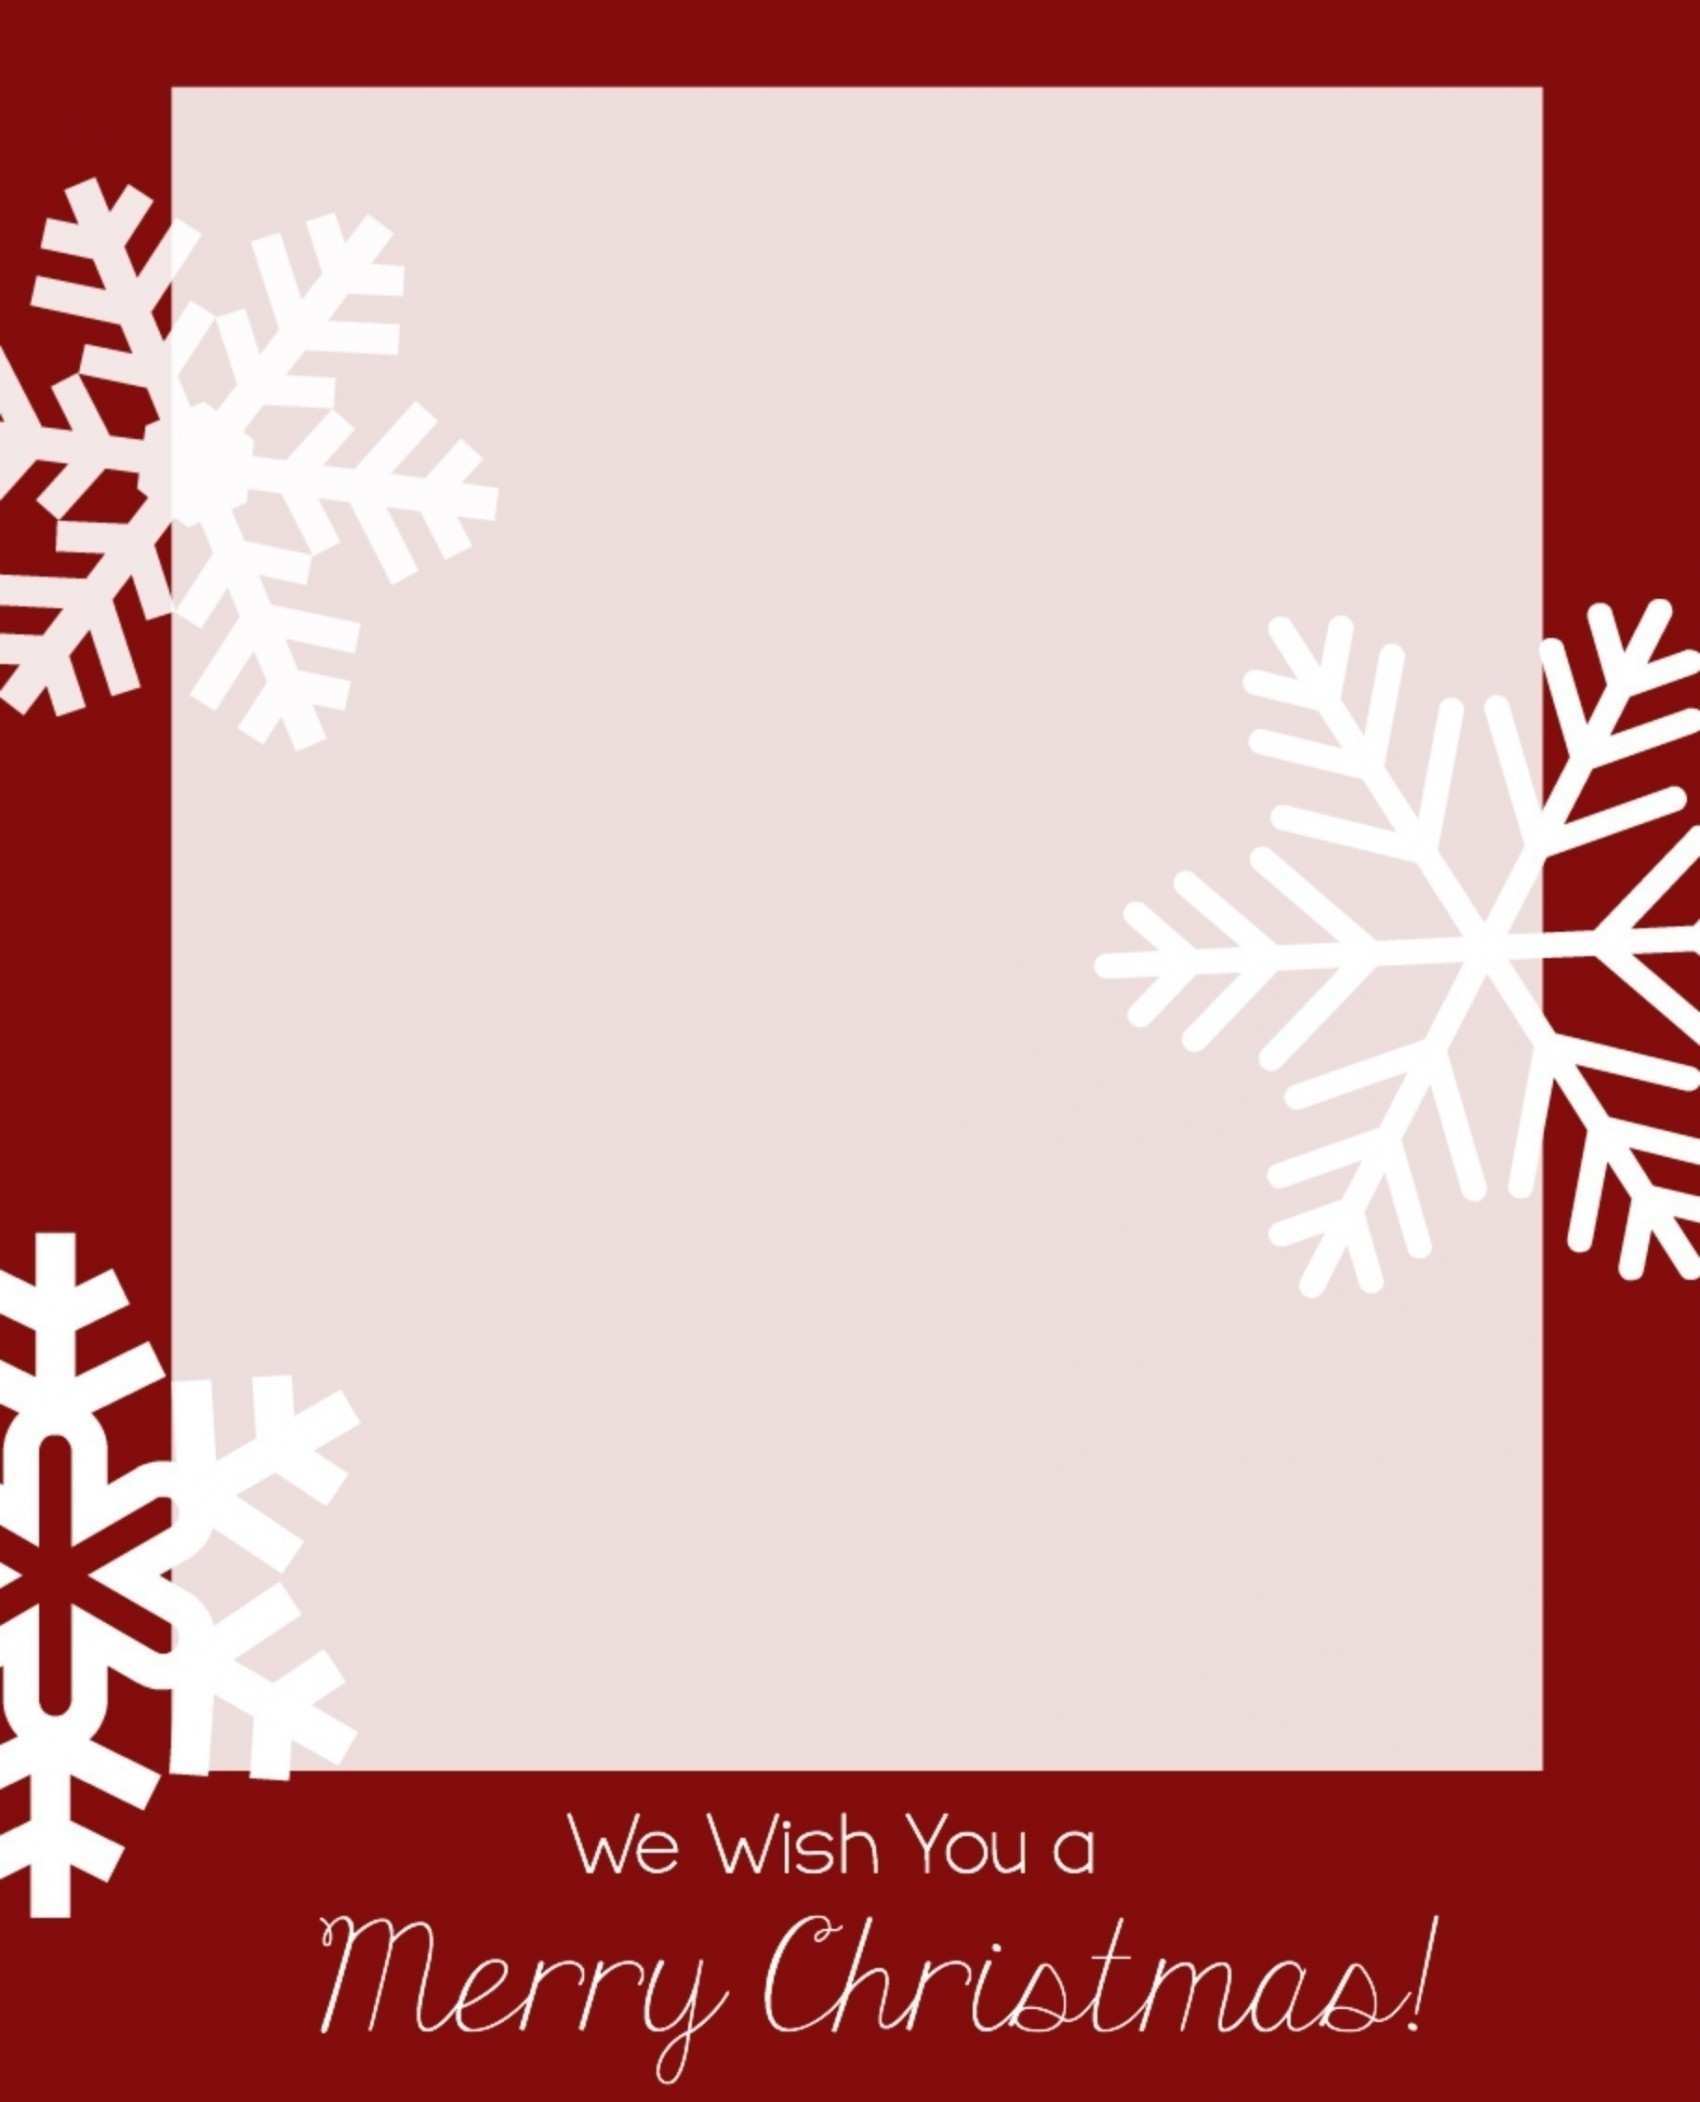 68 Standard Christmas Card Templates For Publisher for Ms Word for Christmas Card Templates For Publisher